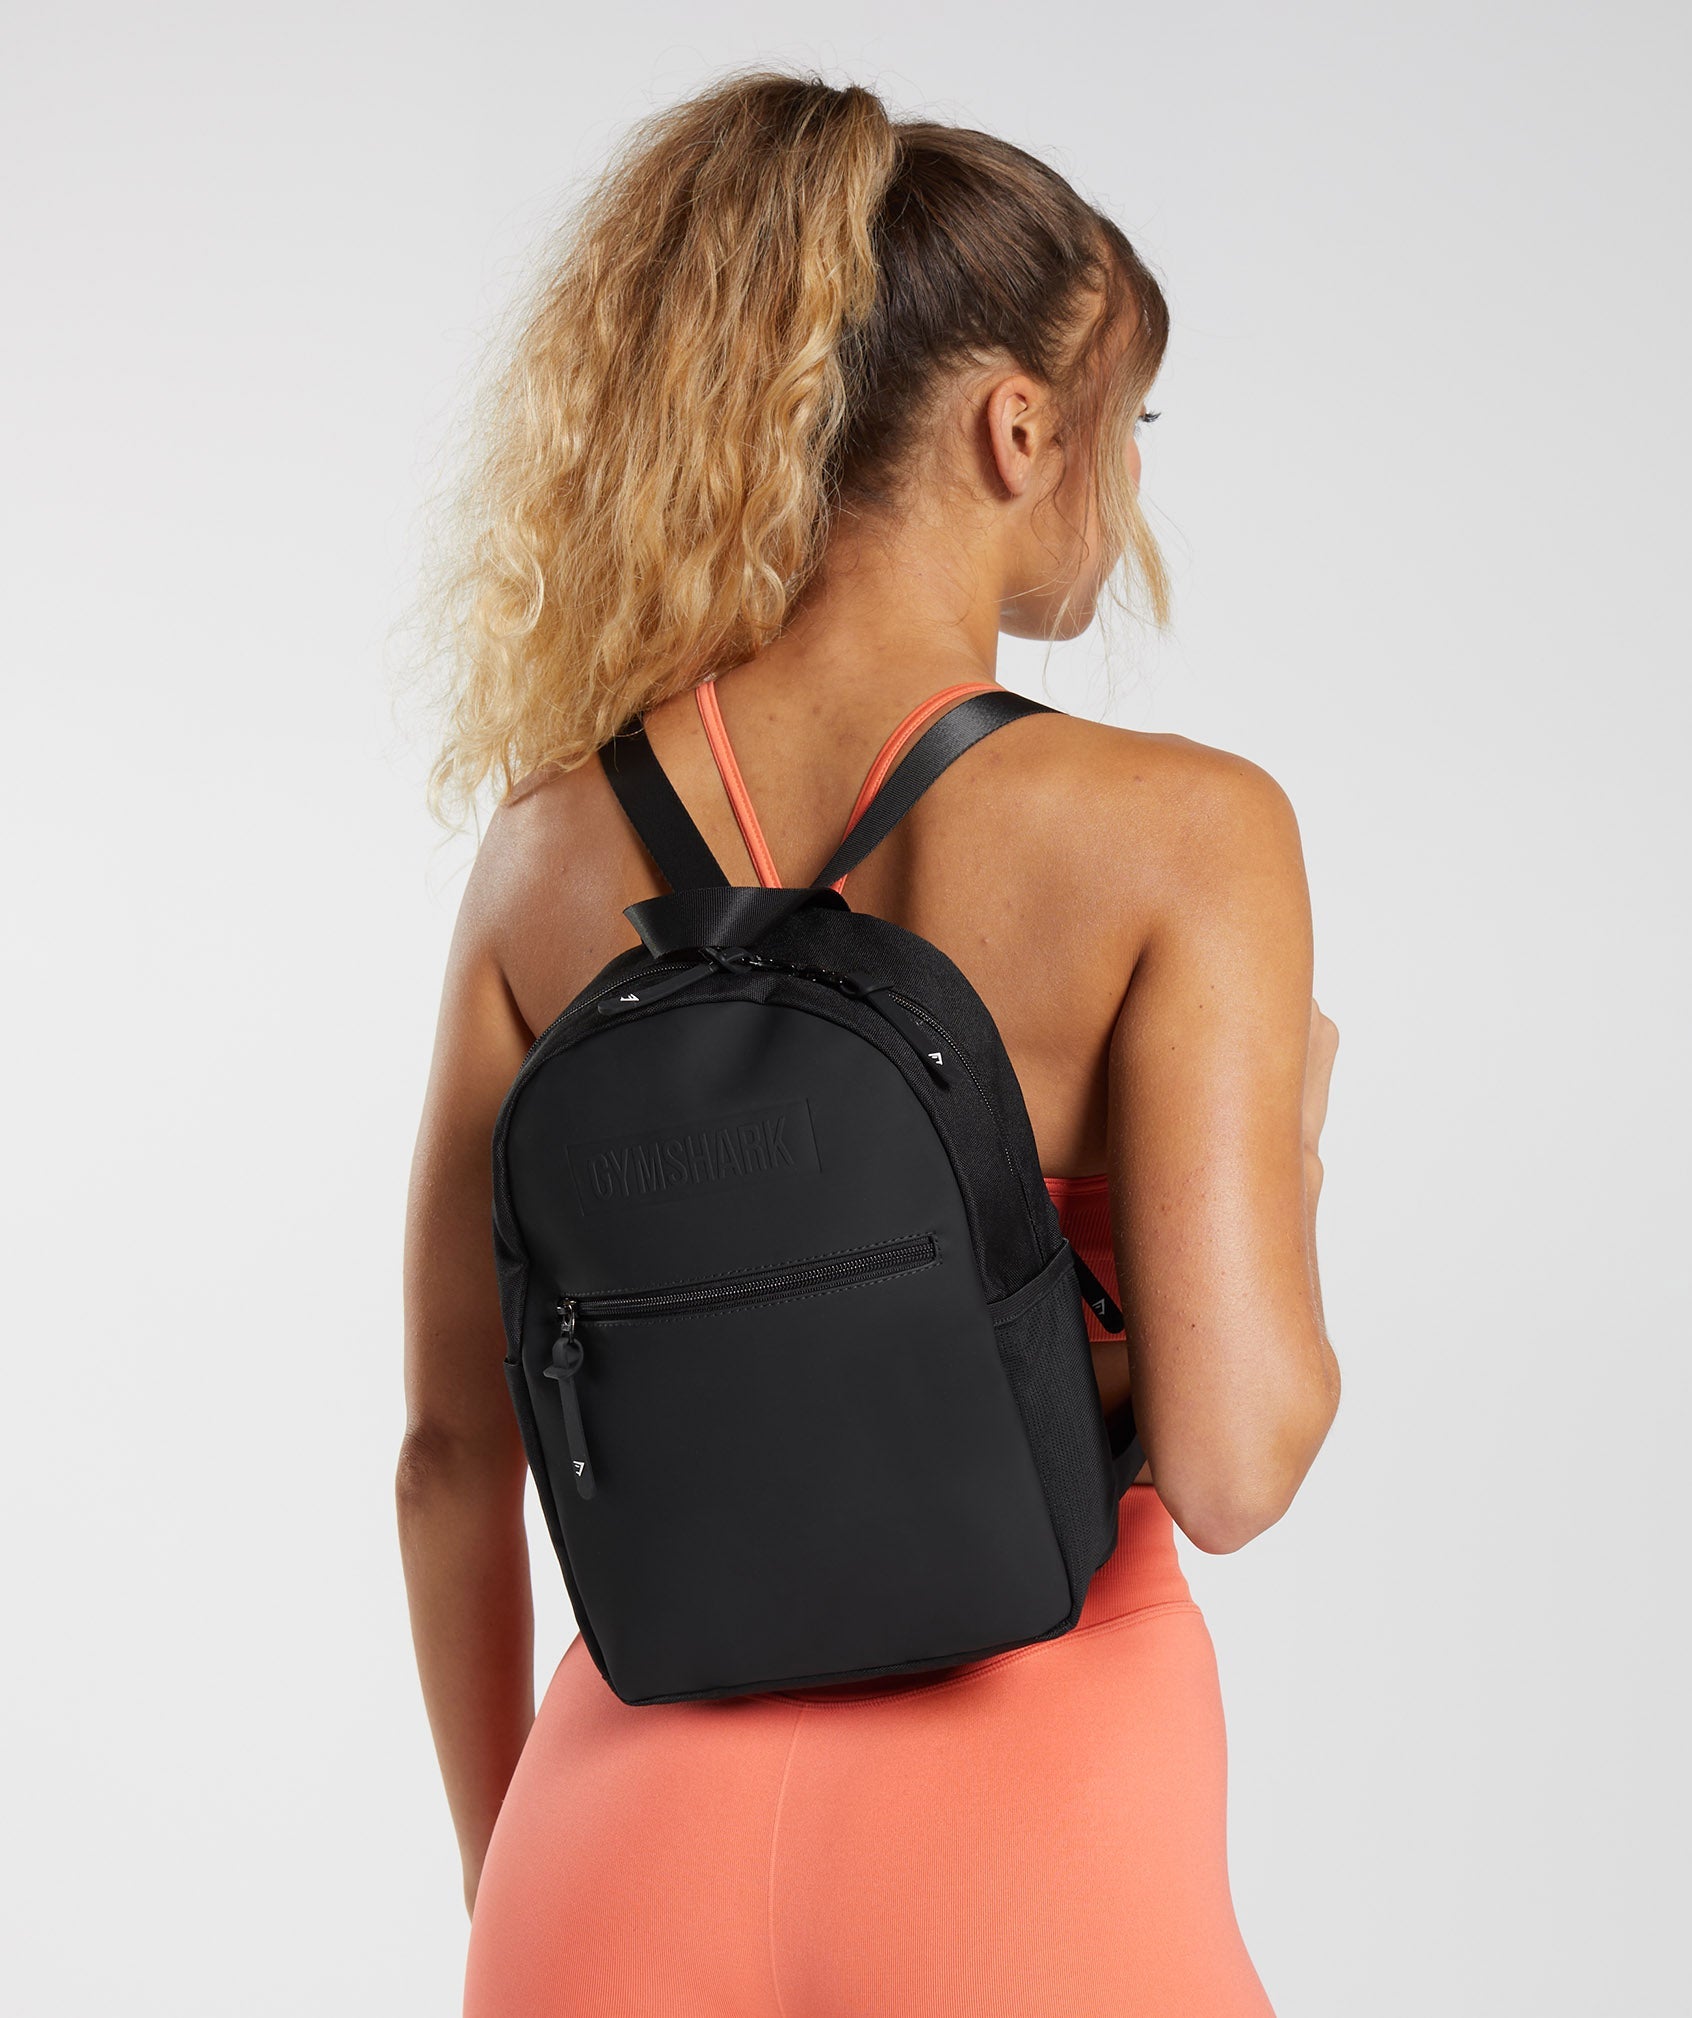 Premium Lifestyle Backpack